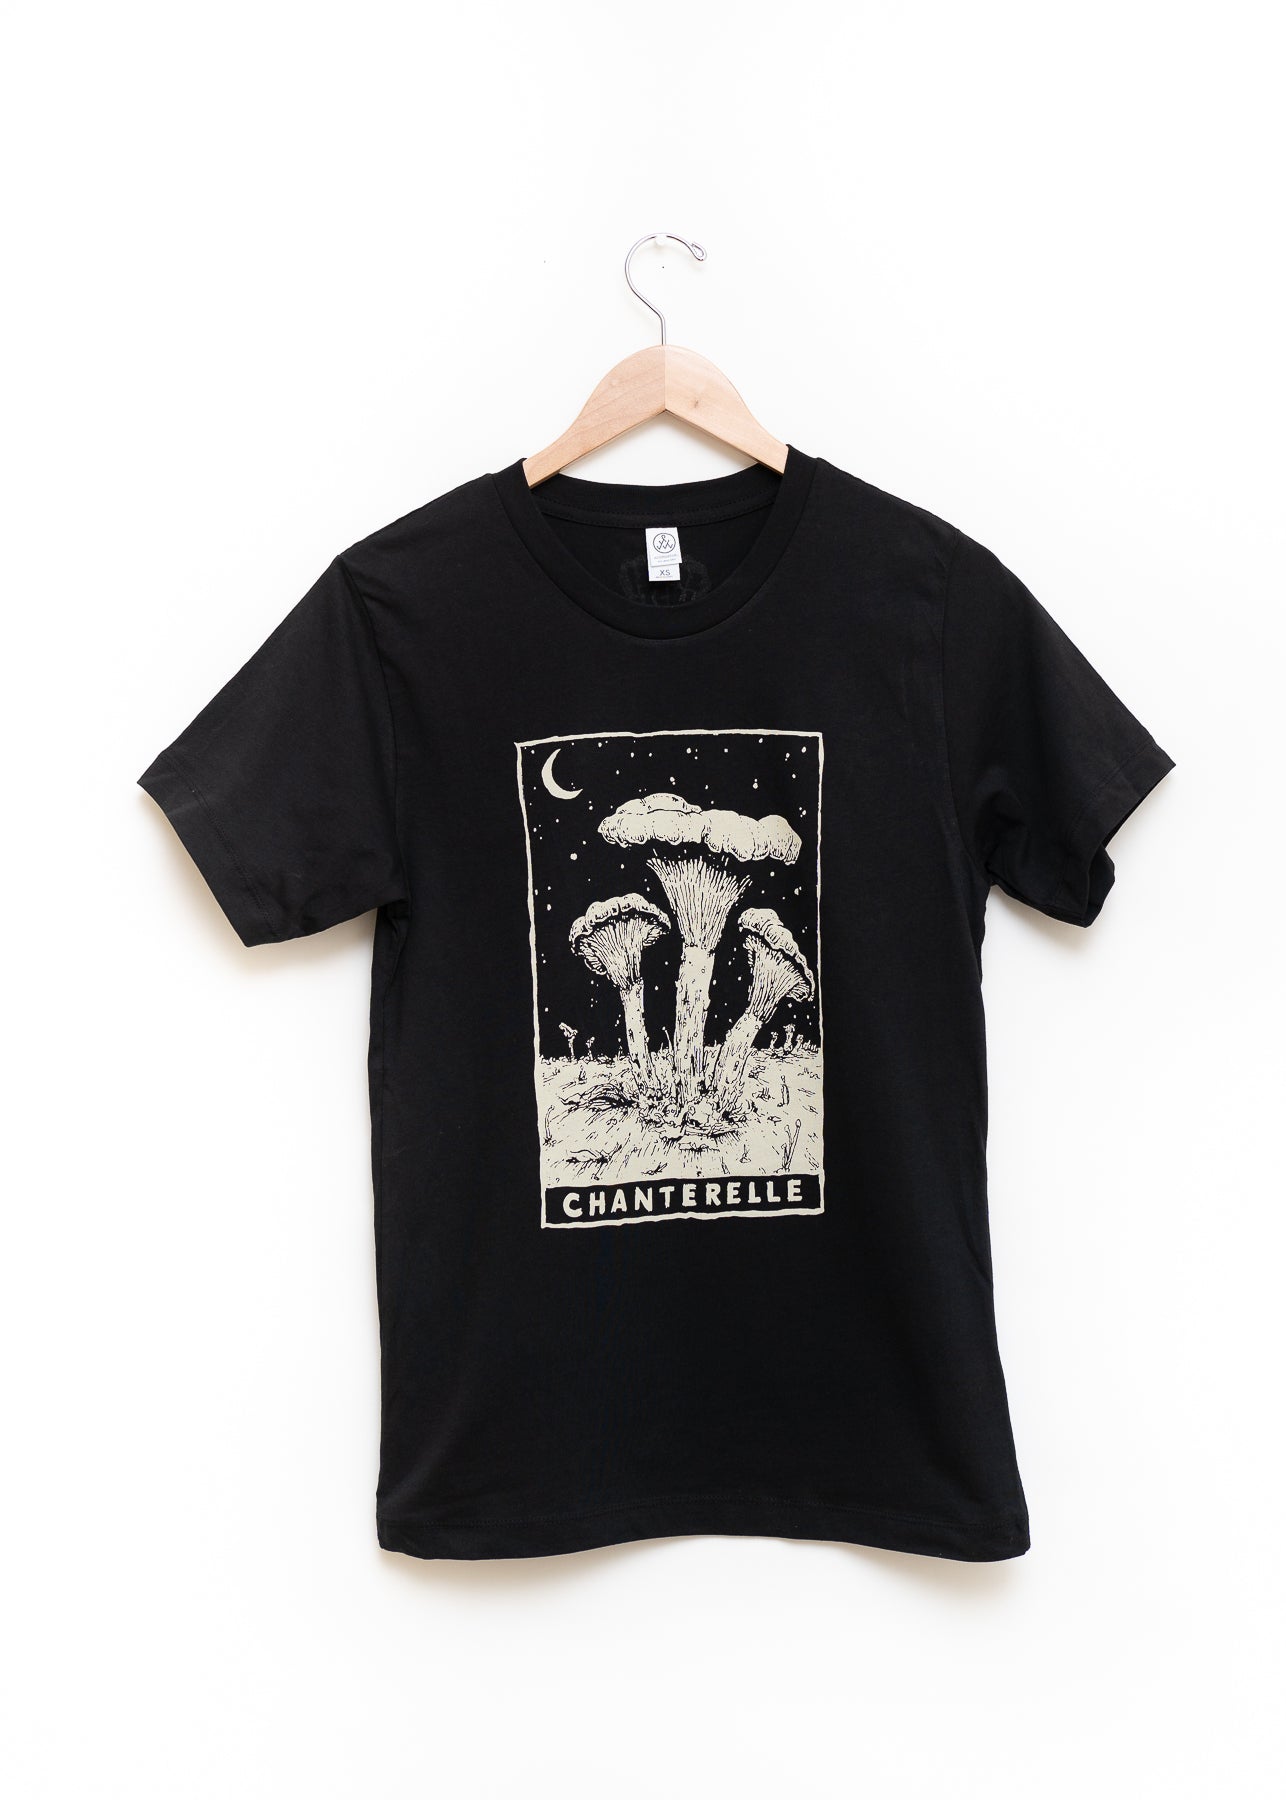 Chanterelle Mushroom Shirt, Black Organic Cotton